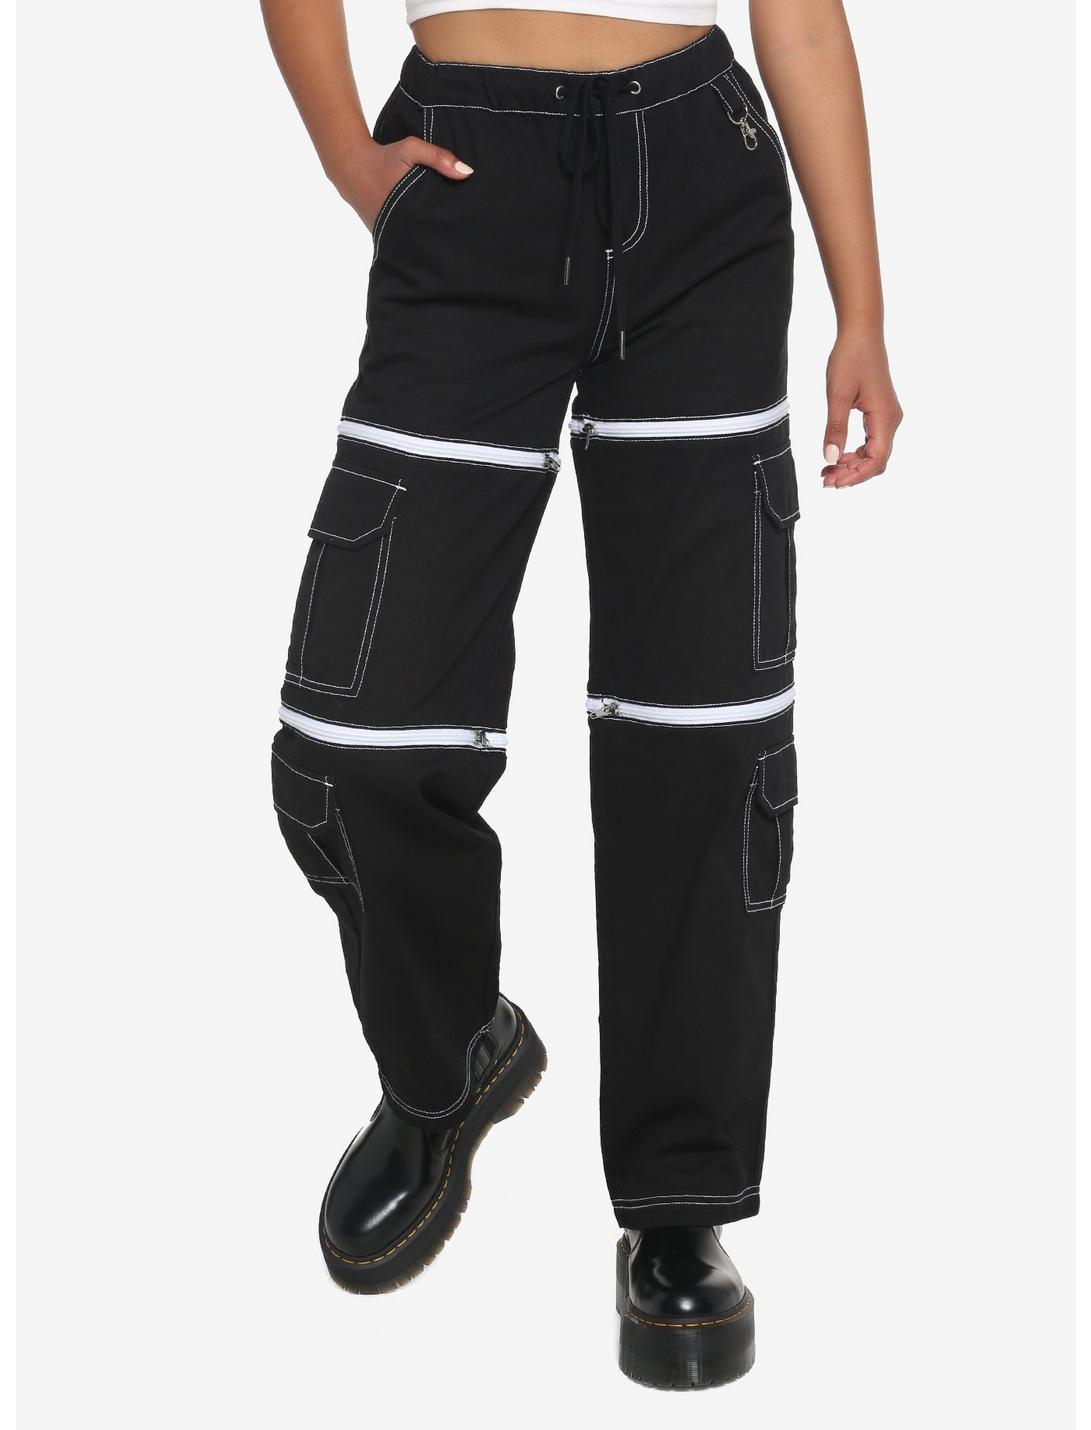 Black & White Zip-Off Carpenter Pants, BLACK  WHITE, hi-res